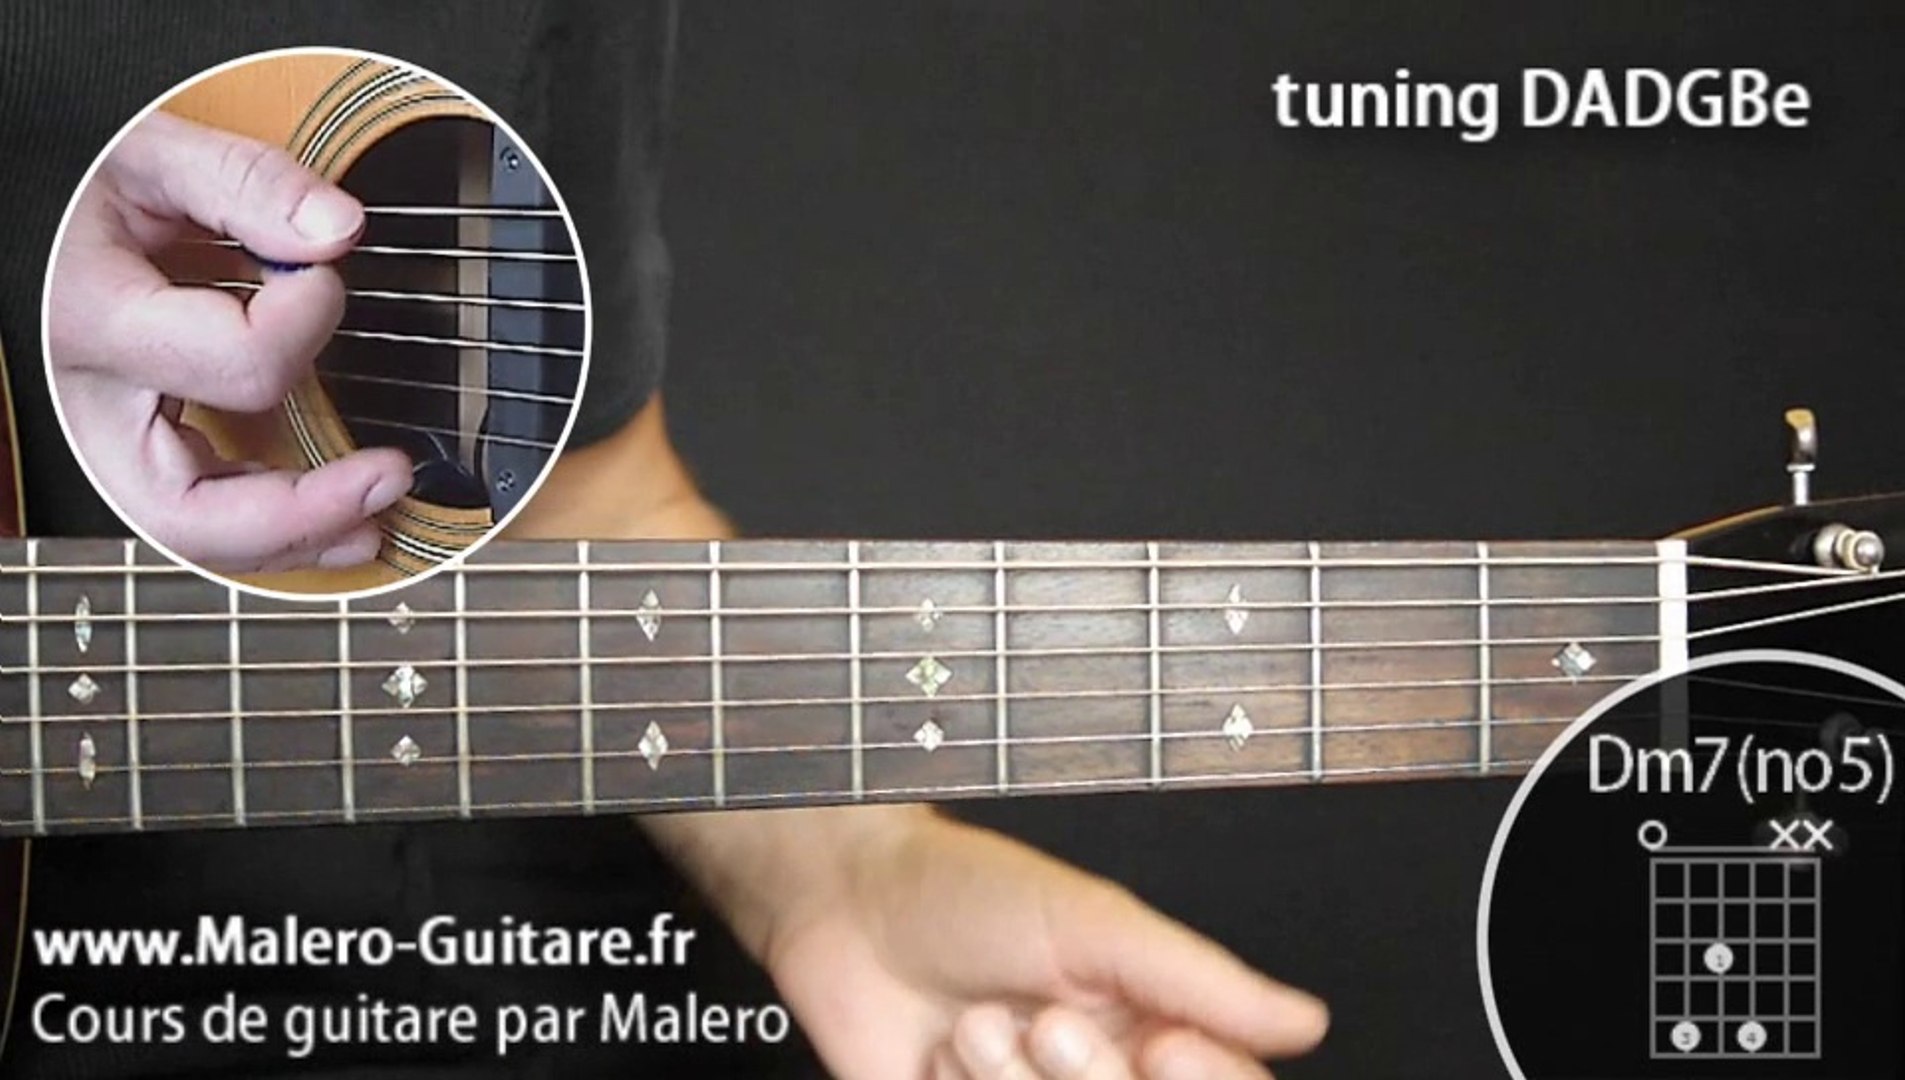 Come Together - Cours de Guitare - Vidéo Dailymotion